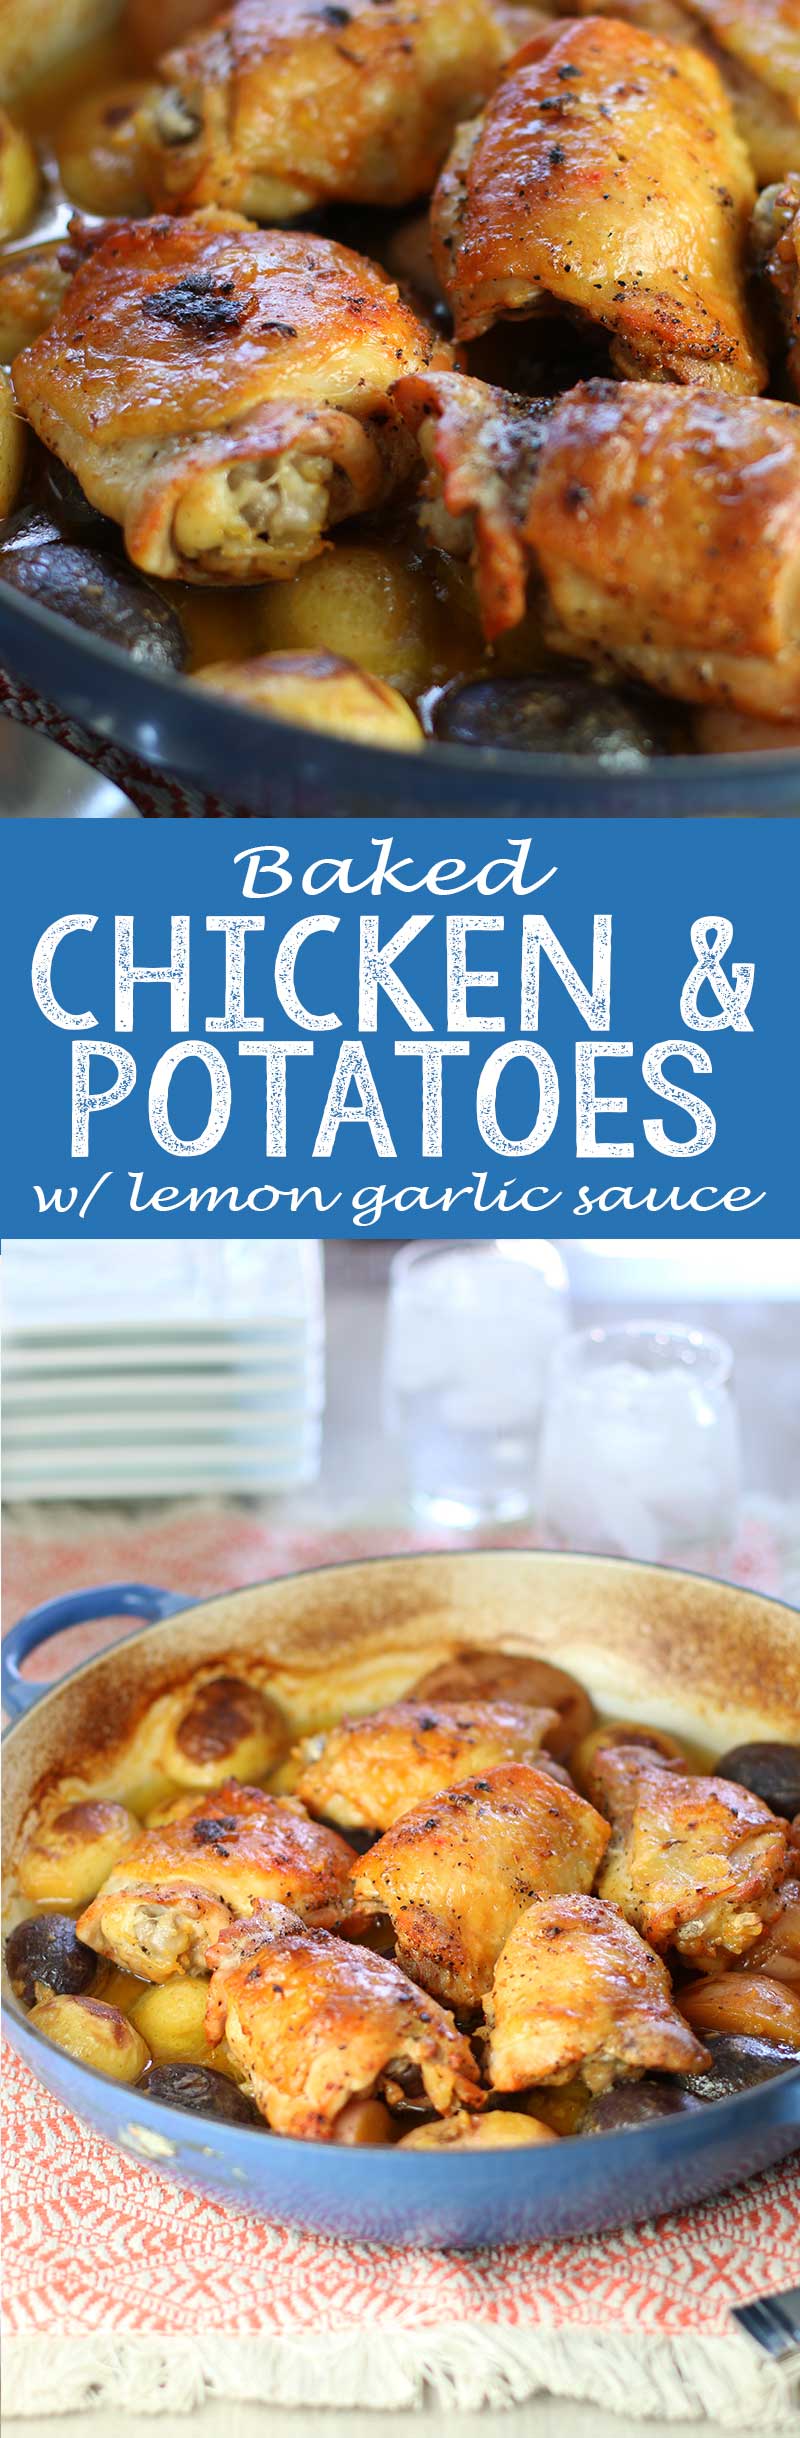 Chicken and Potatoes with lemon garlic sauce